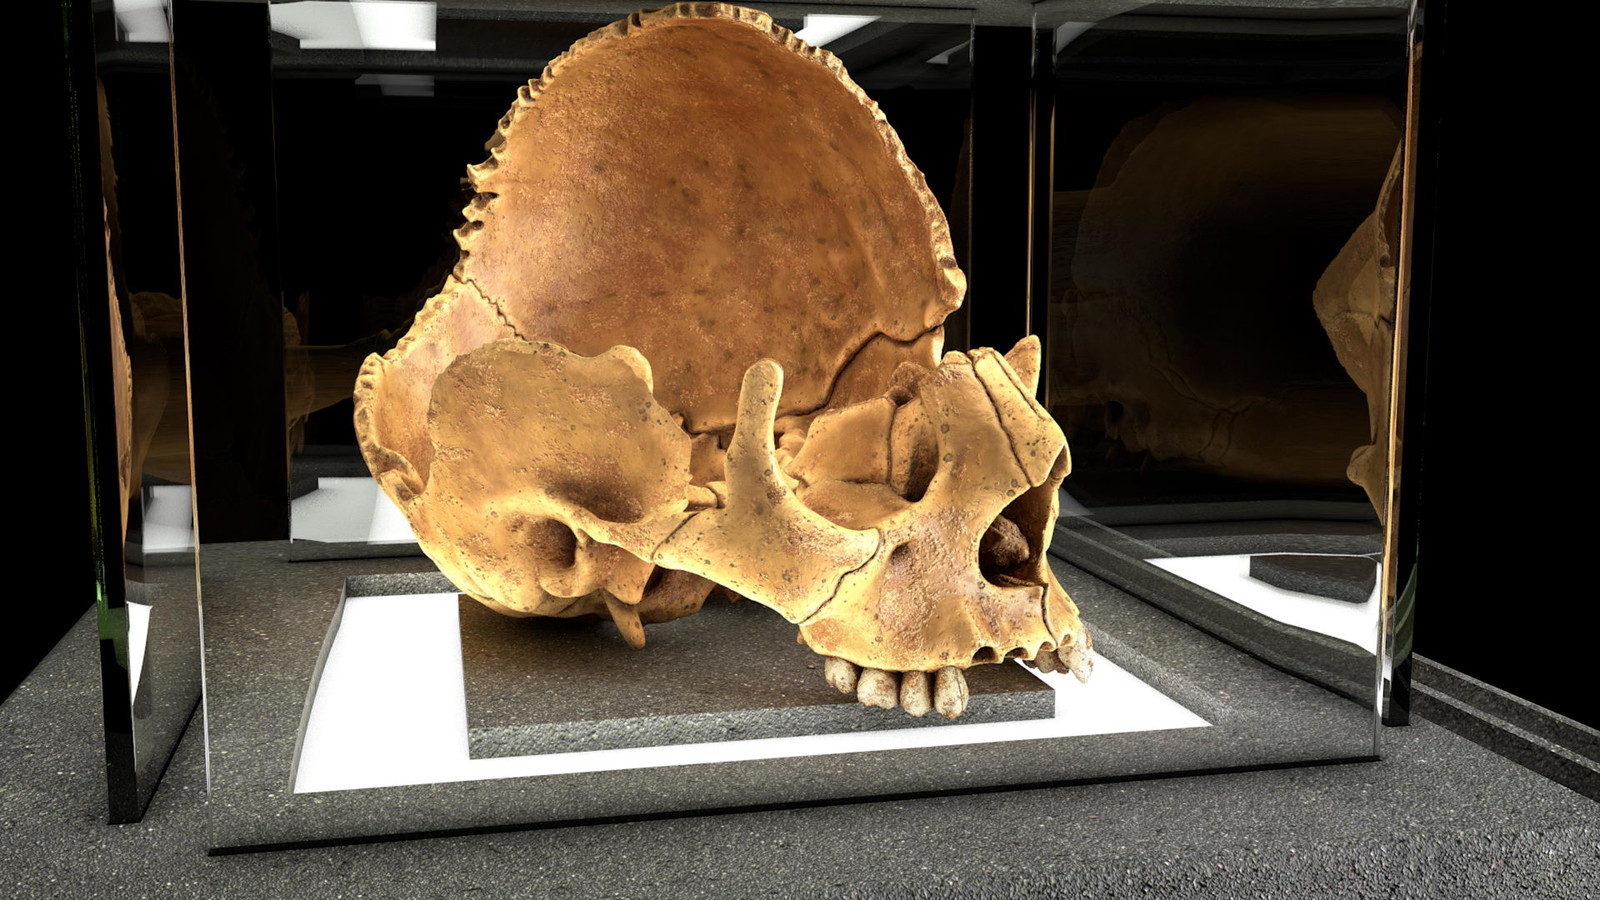 Remains of a human skull 